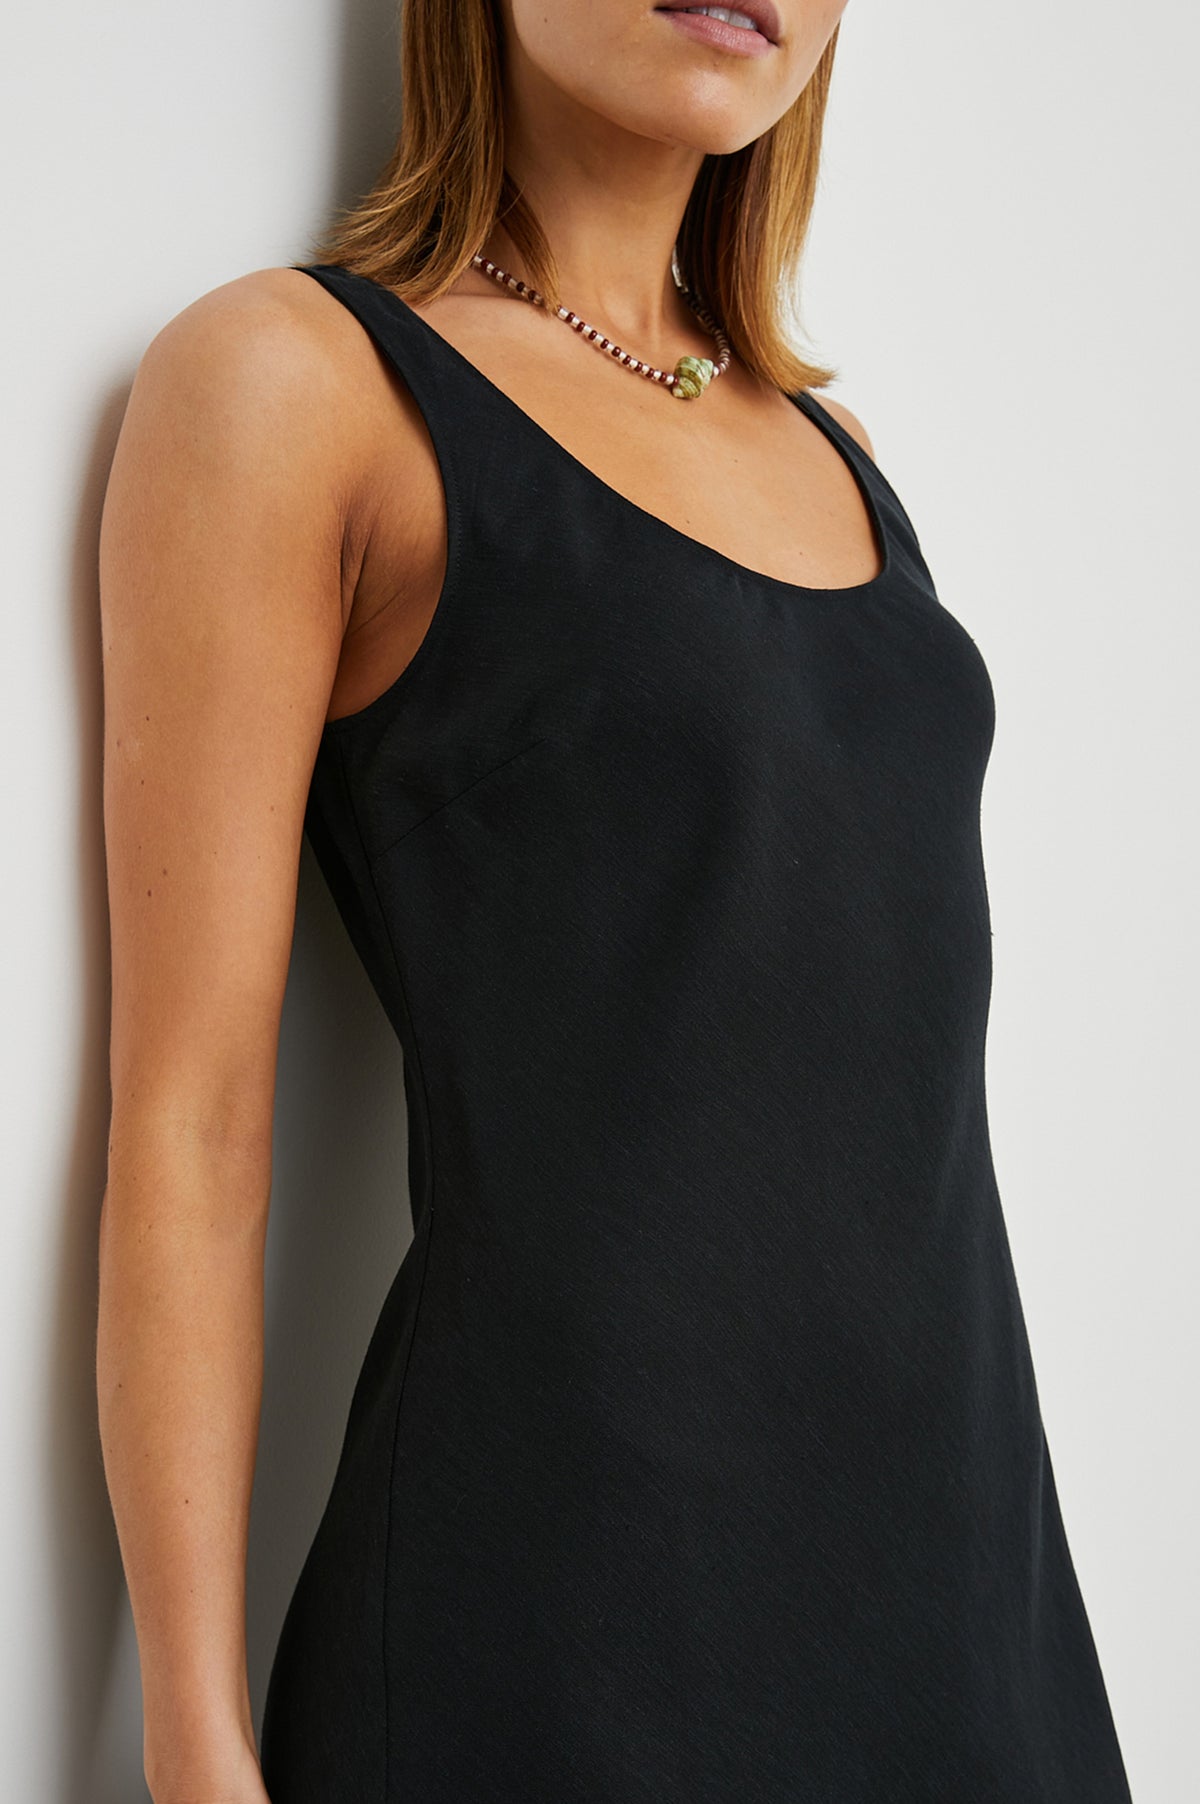 Black sleeveless dress with side split